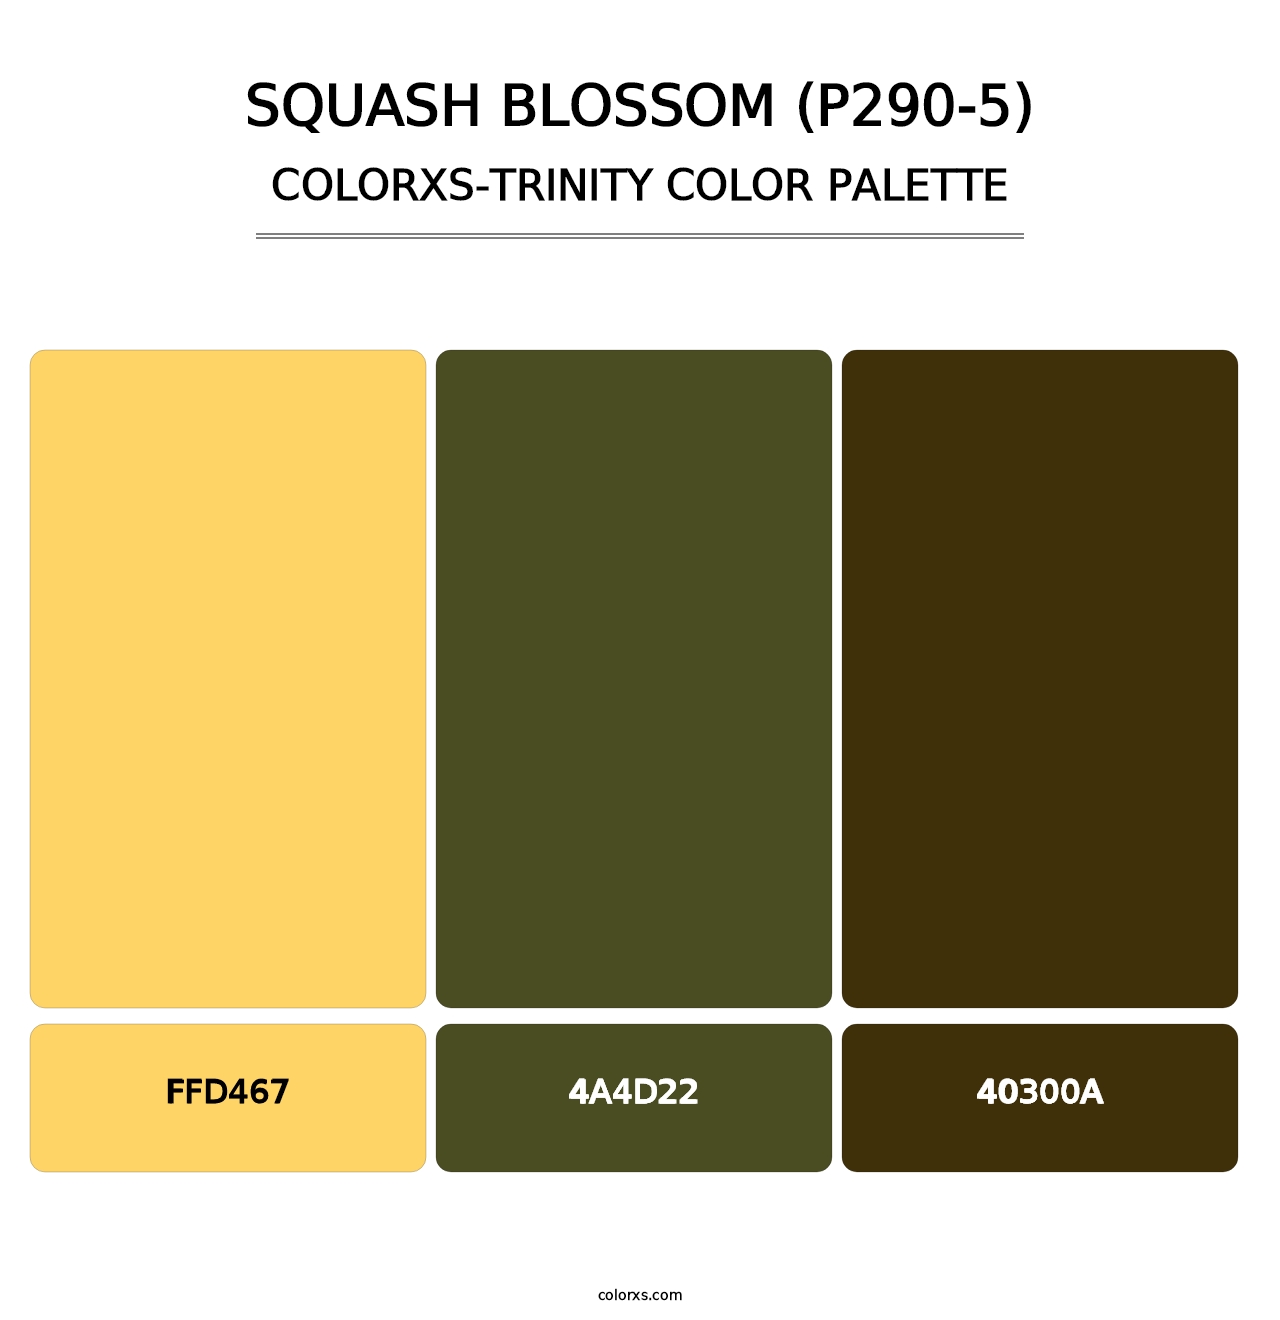 Squash Blossom (P290-5) - Colorxs Trinity Palette